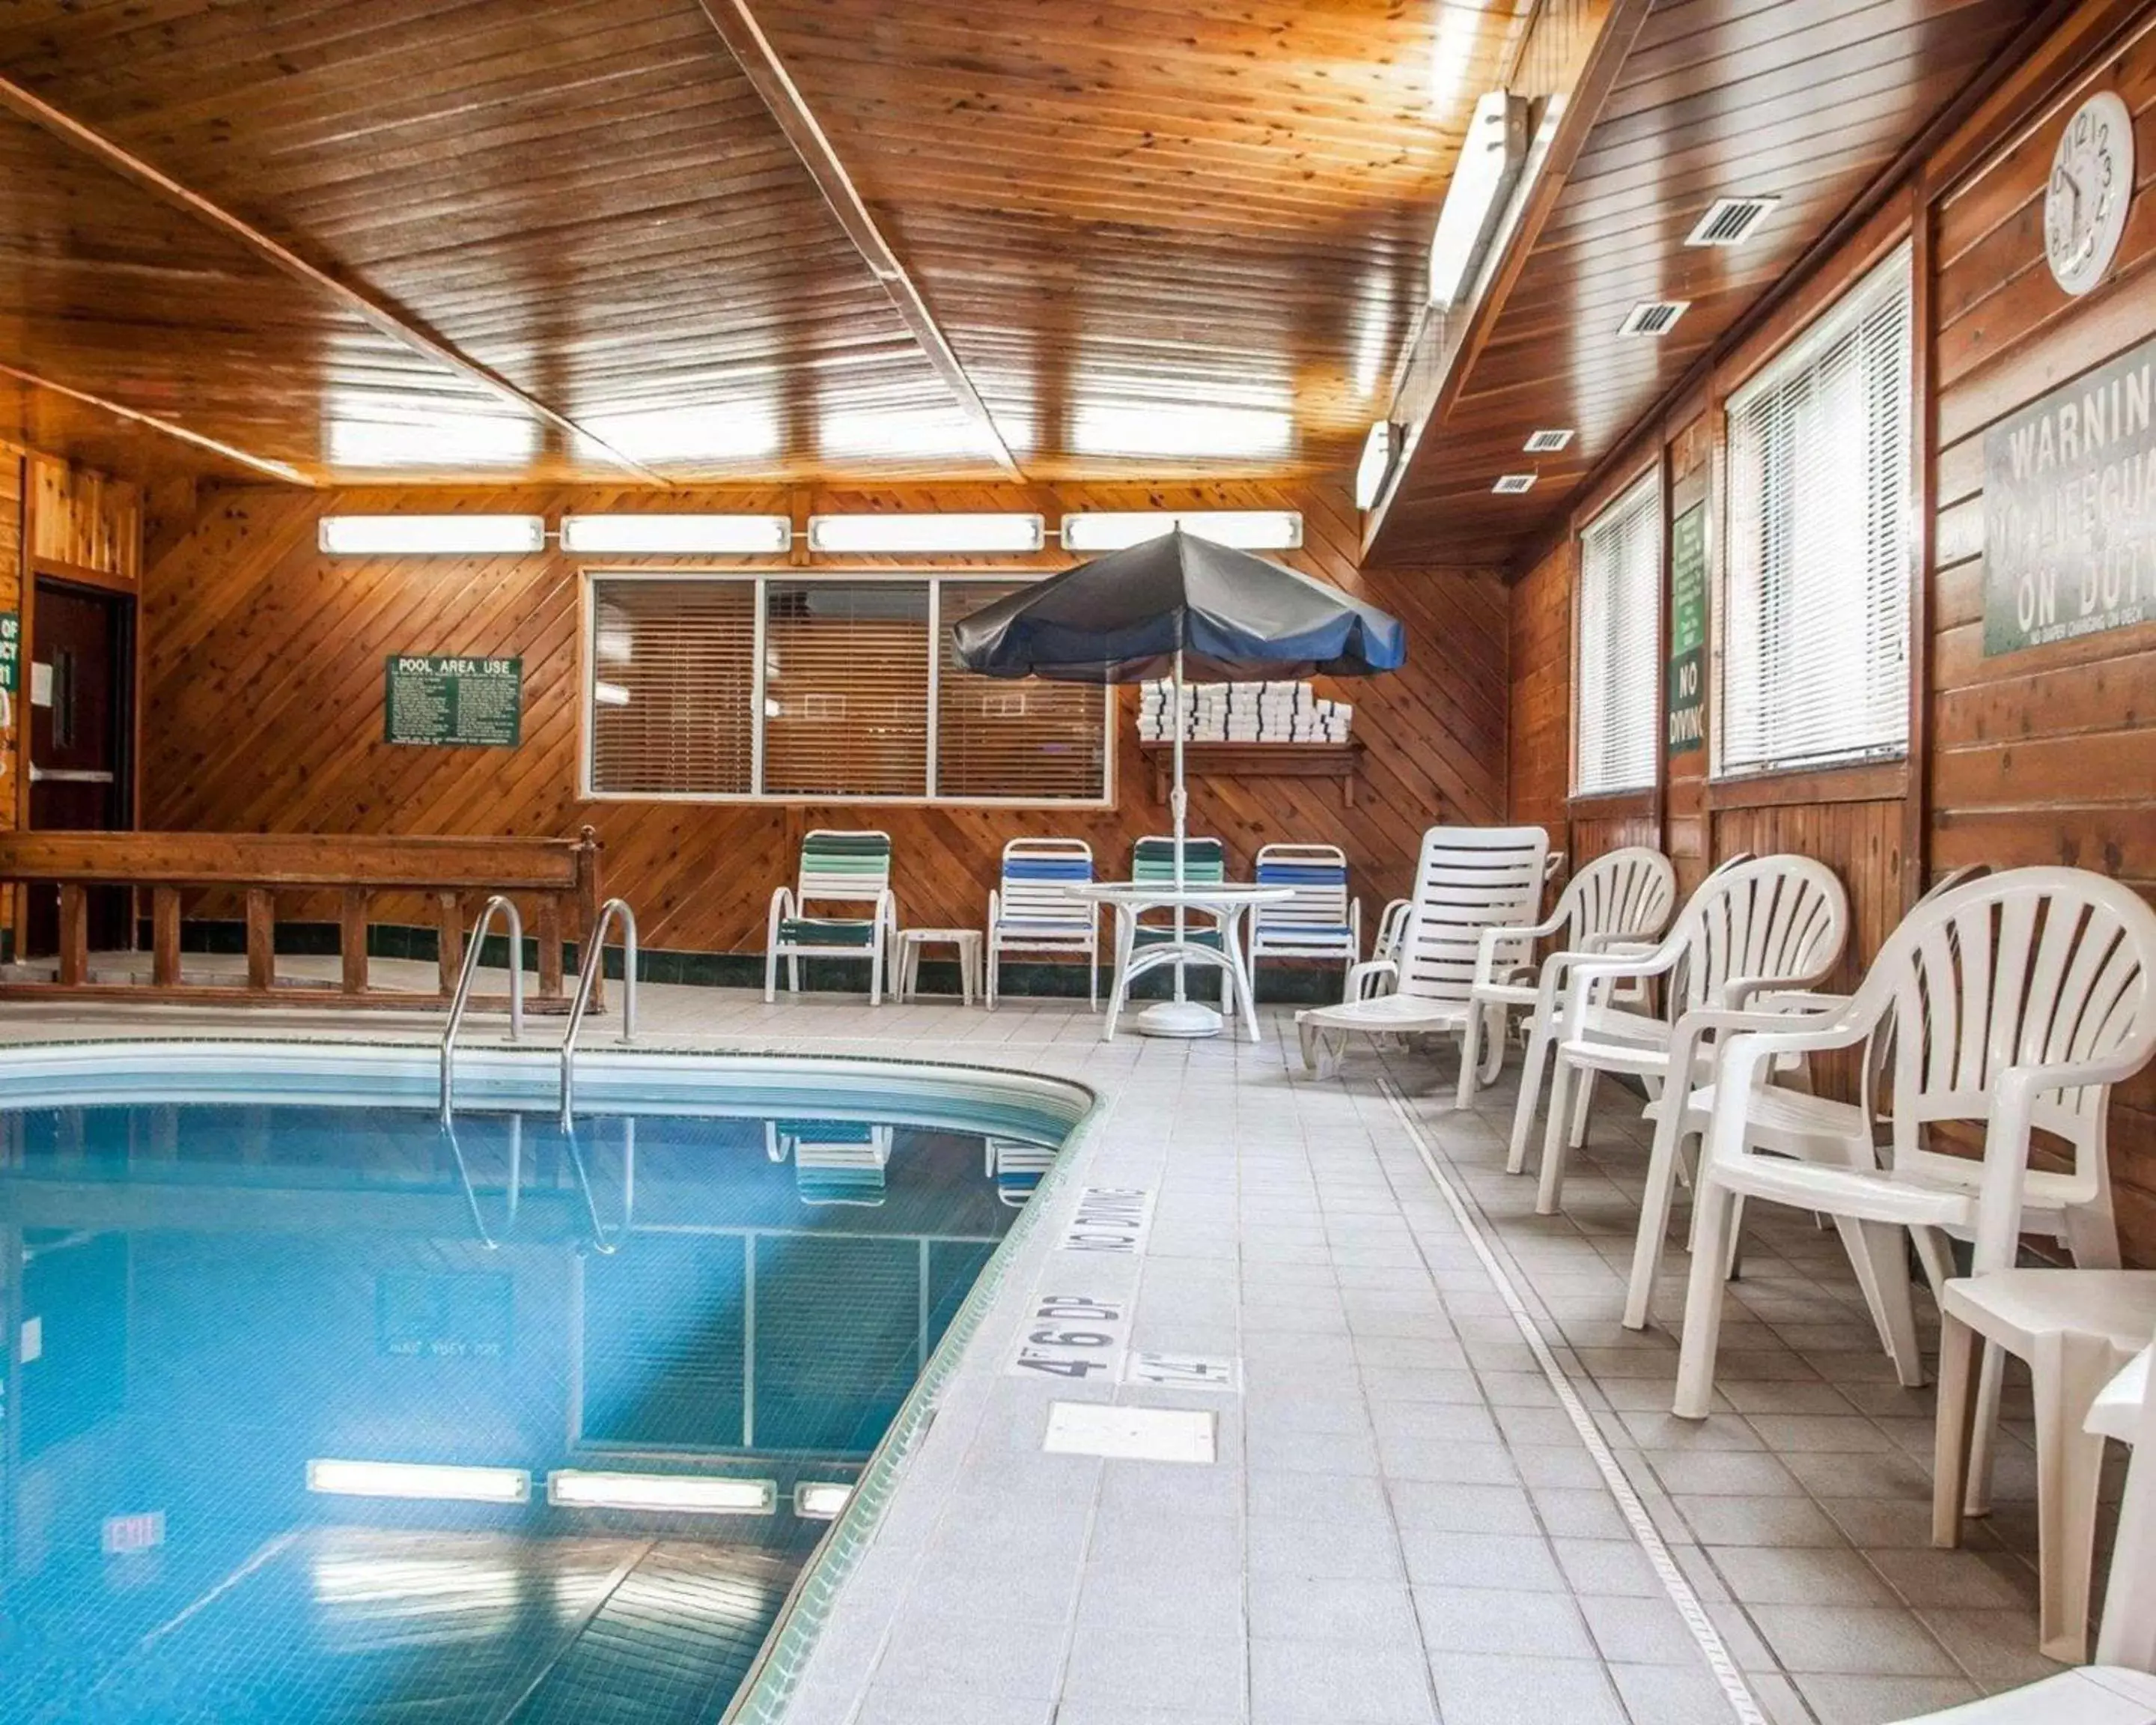 On site, Swimming Pool in Quality Inn Beloit